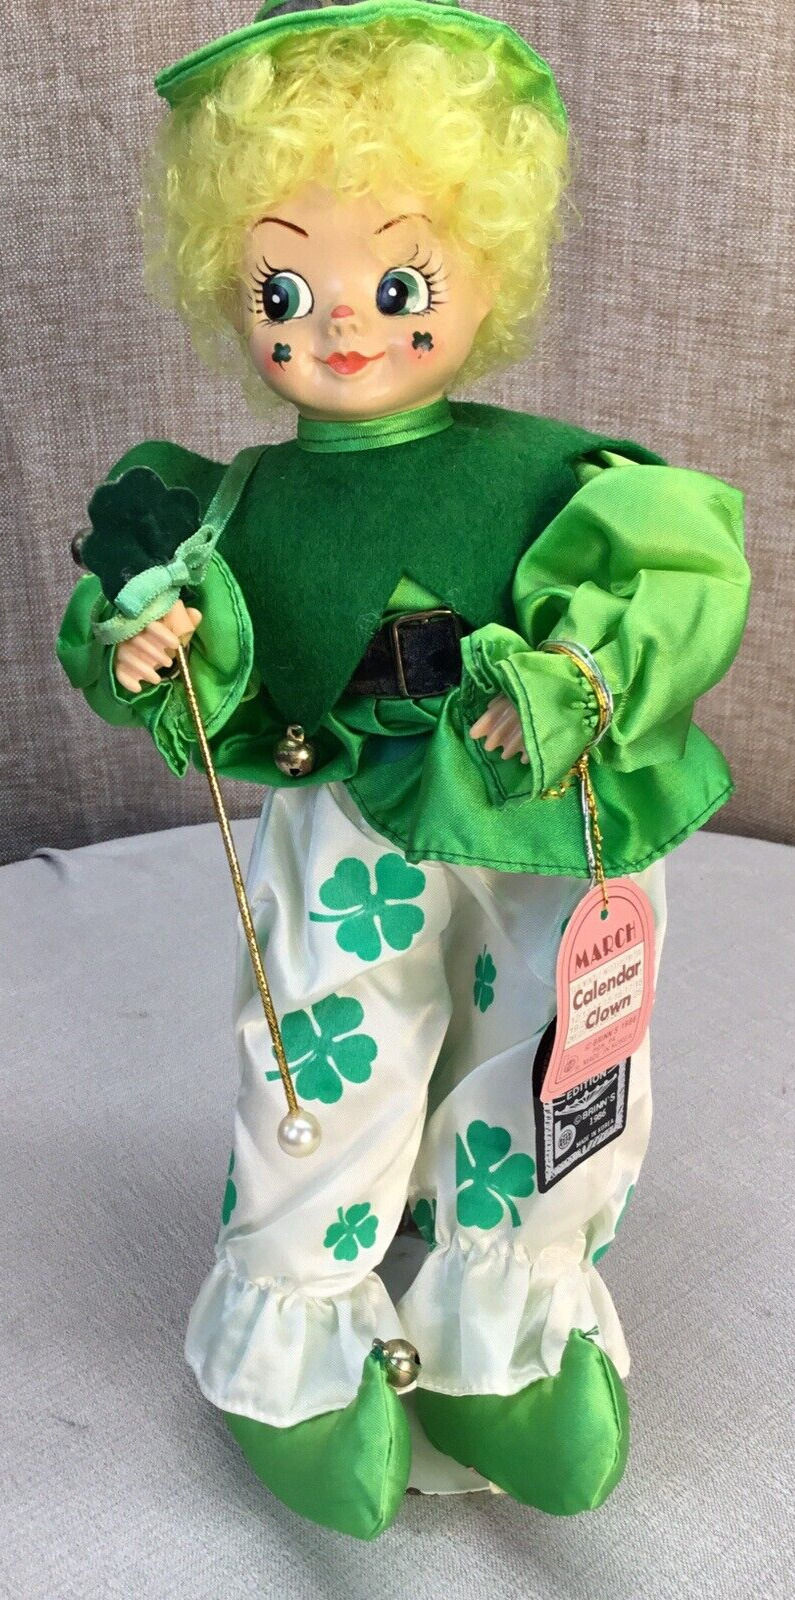 Brinn's Calendar Clown Doll March Limited Edition 1986 Irish St Patricks Day